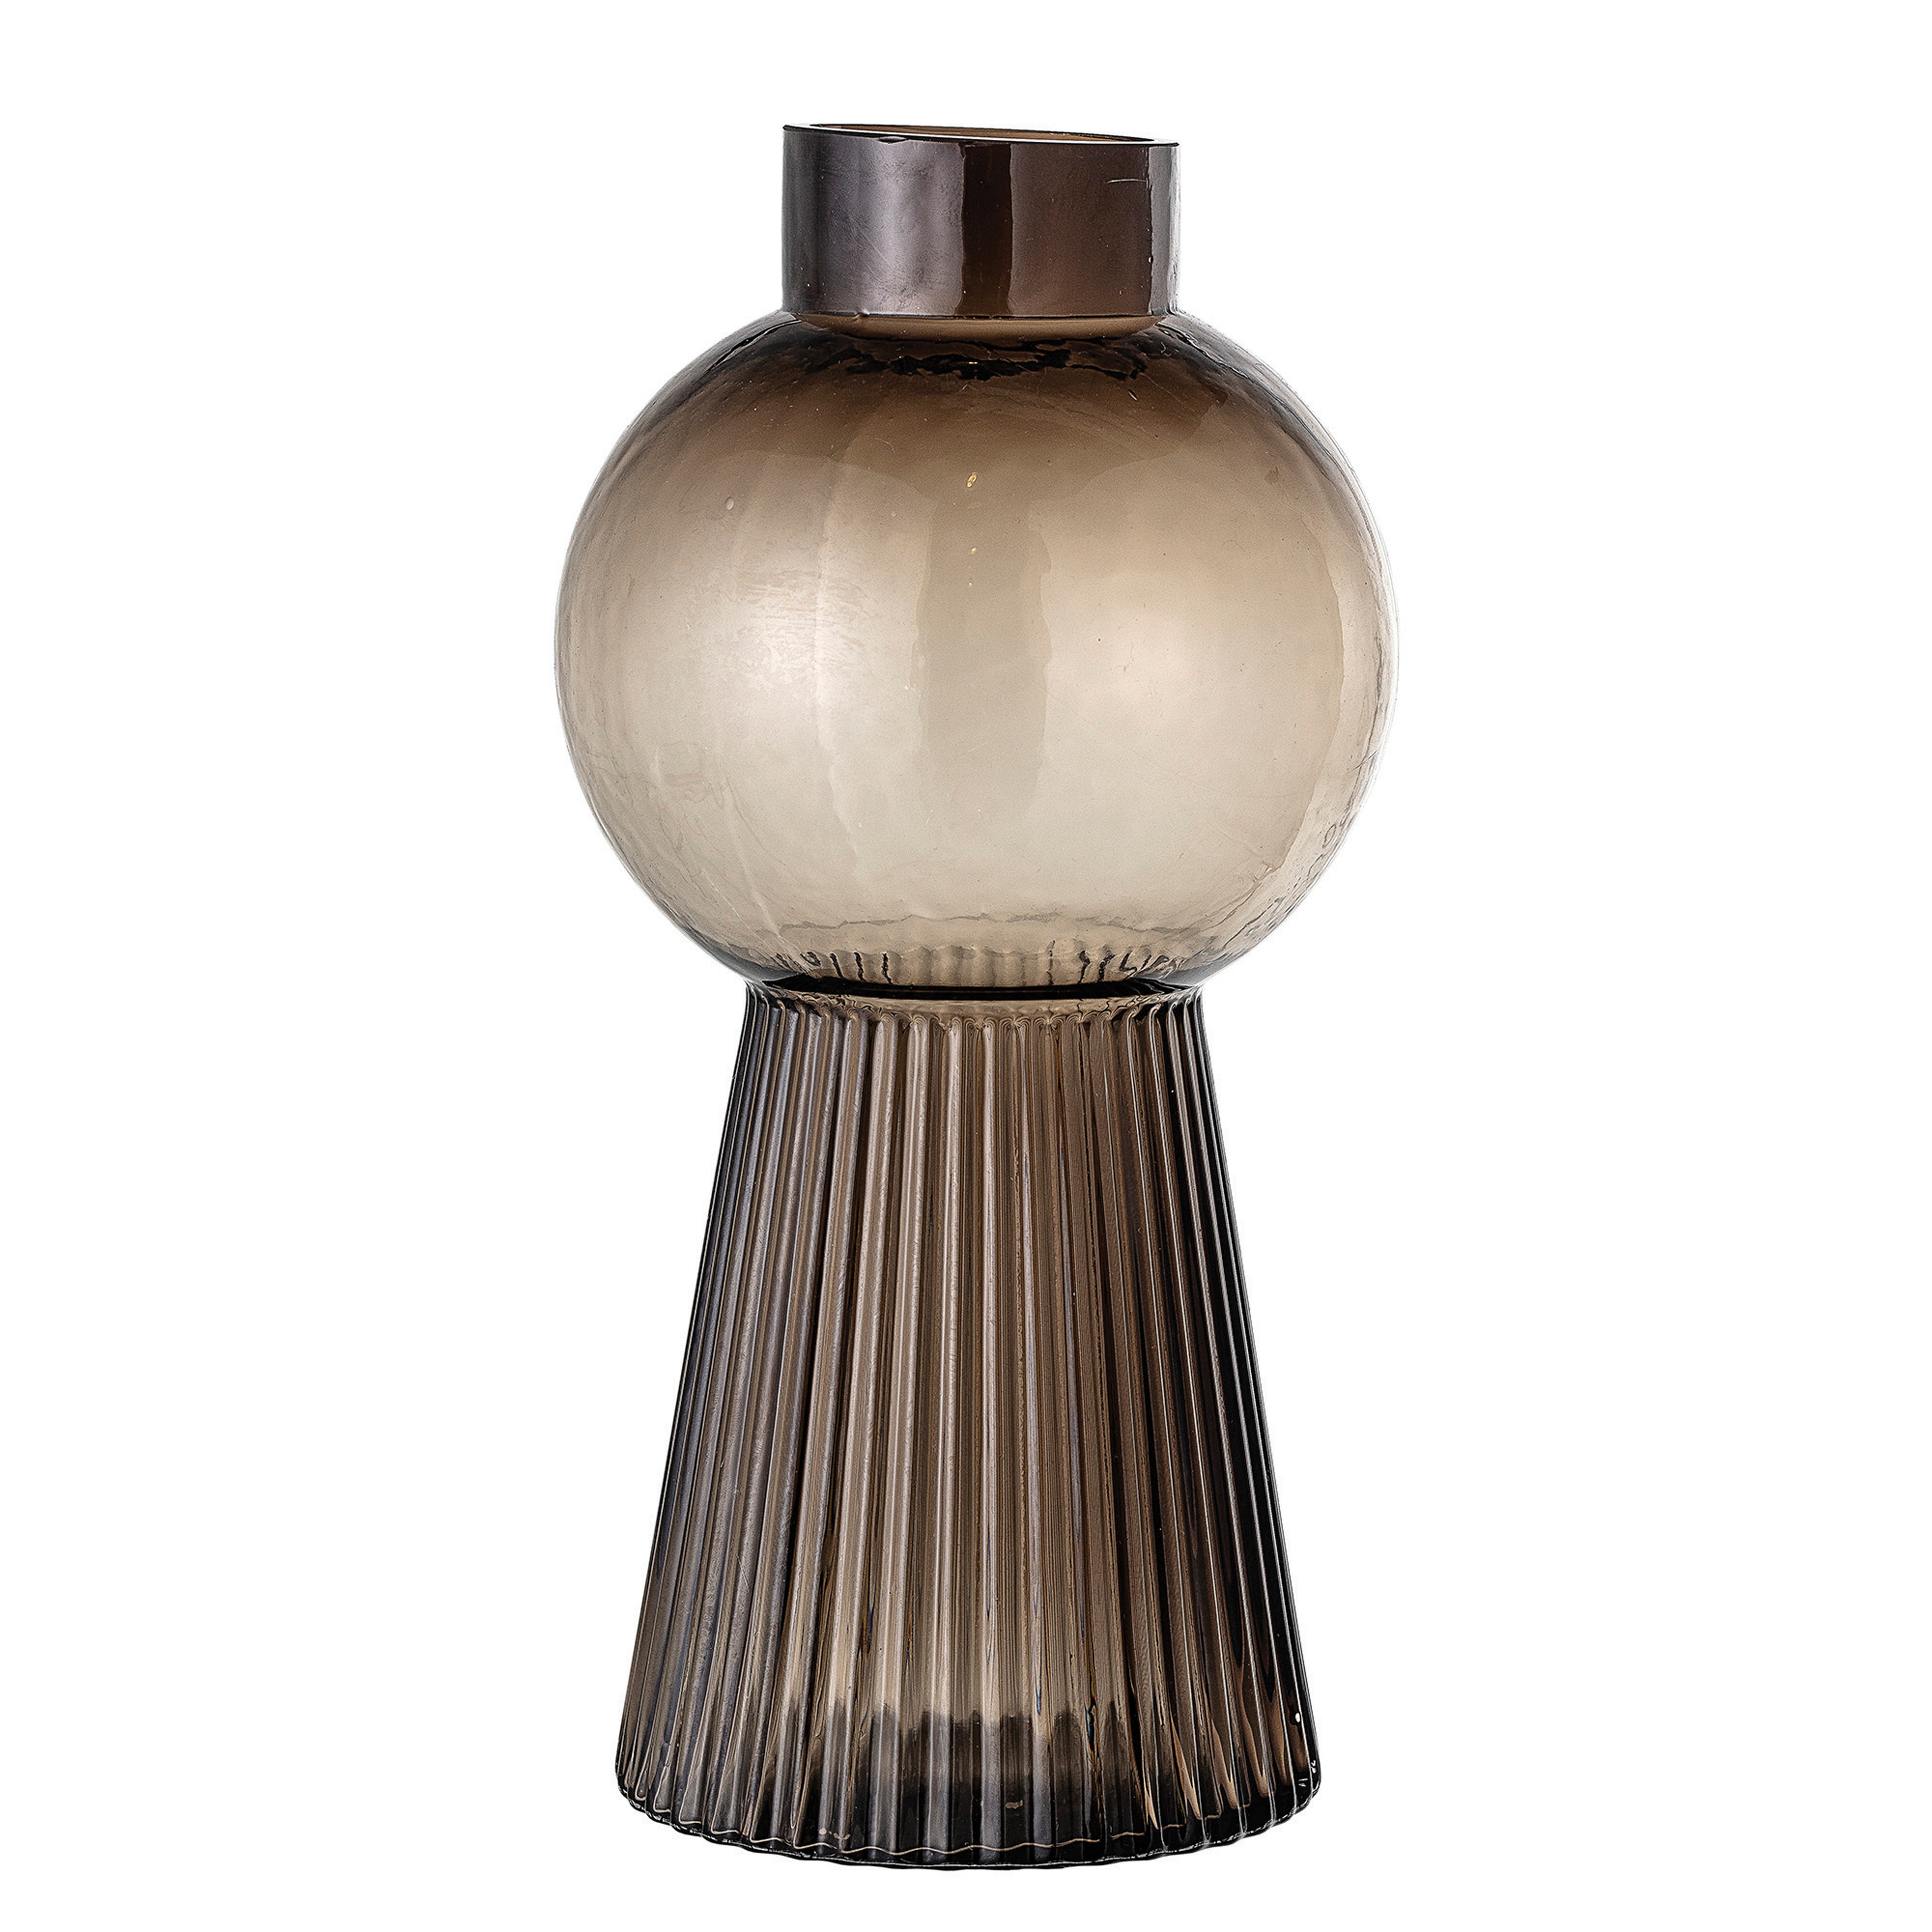 13.25"H Round Glass Vase with Fluted Pedestal Base - Moss & Wilder